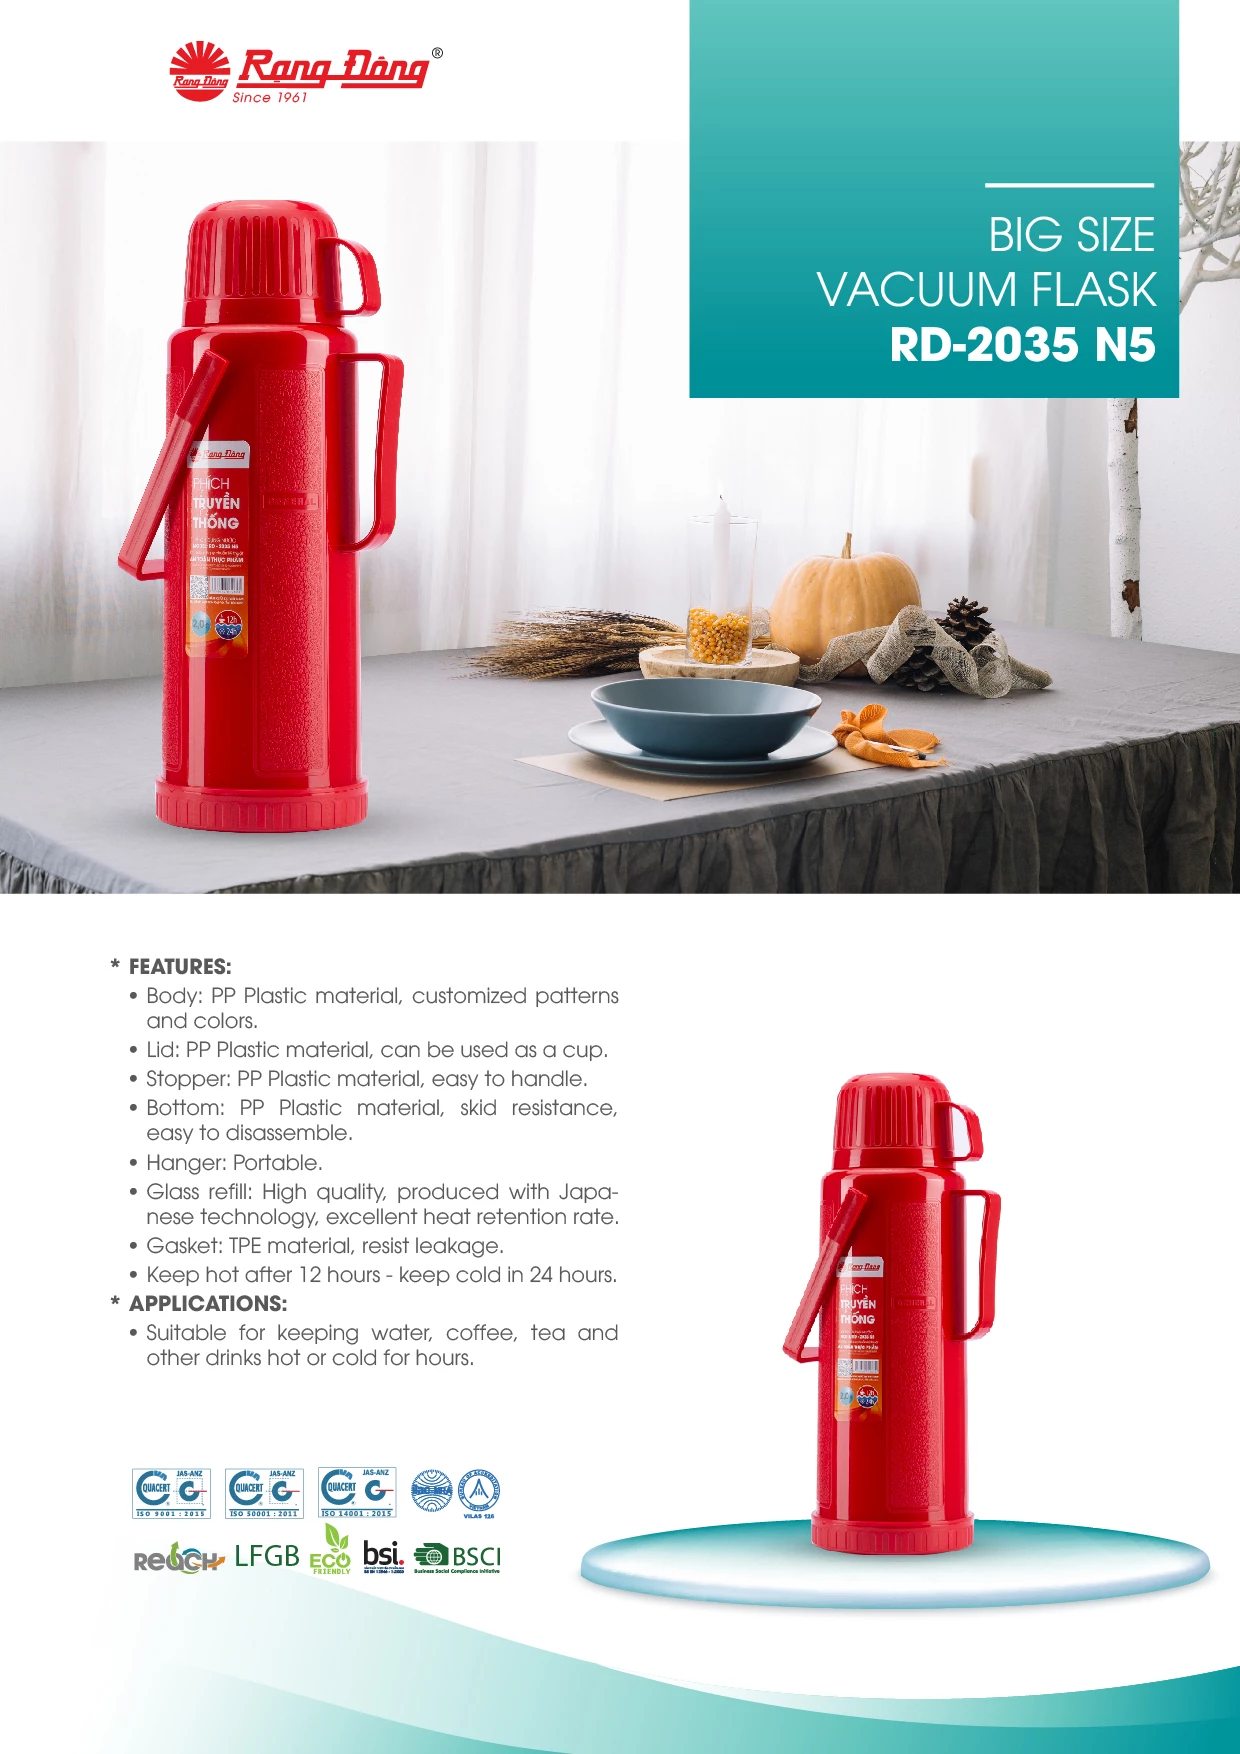 Big Size Vacuum Flasks RD-2035 N5